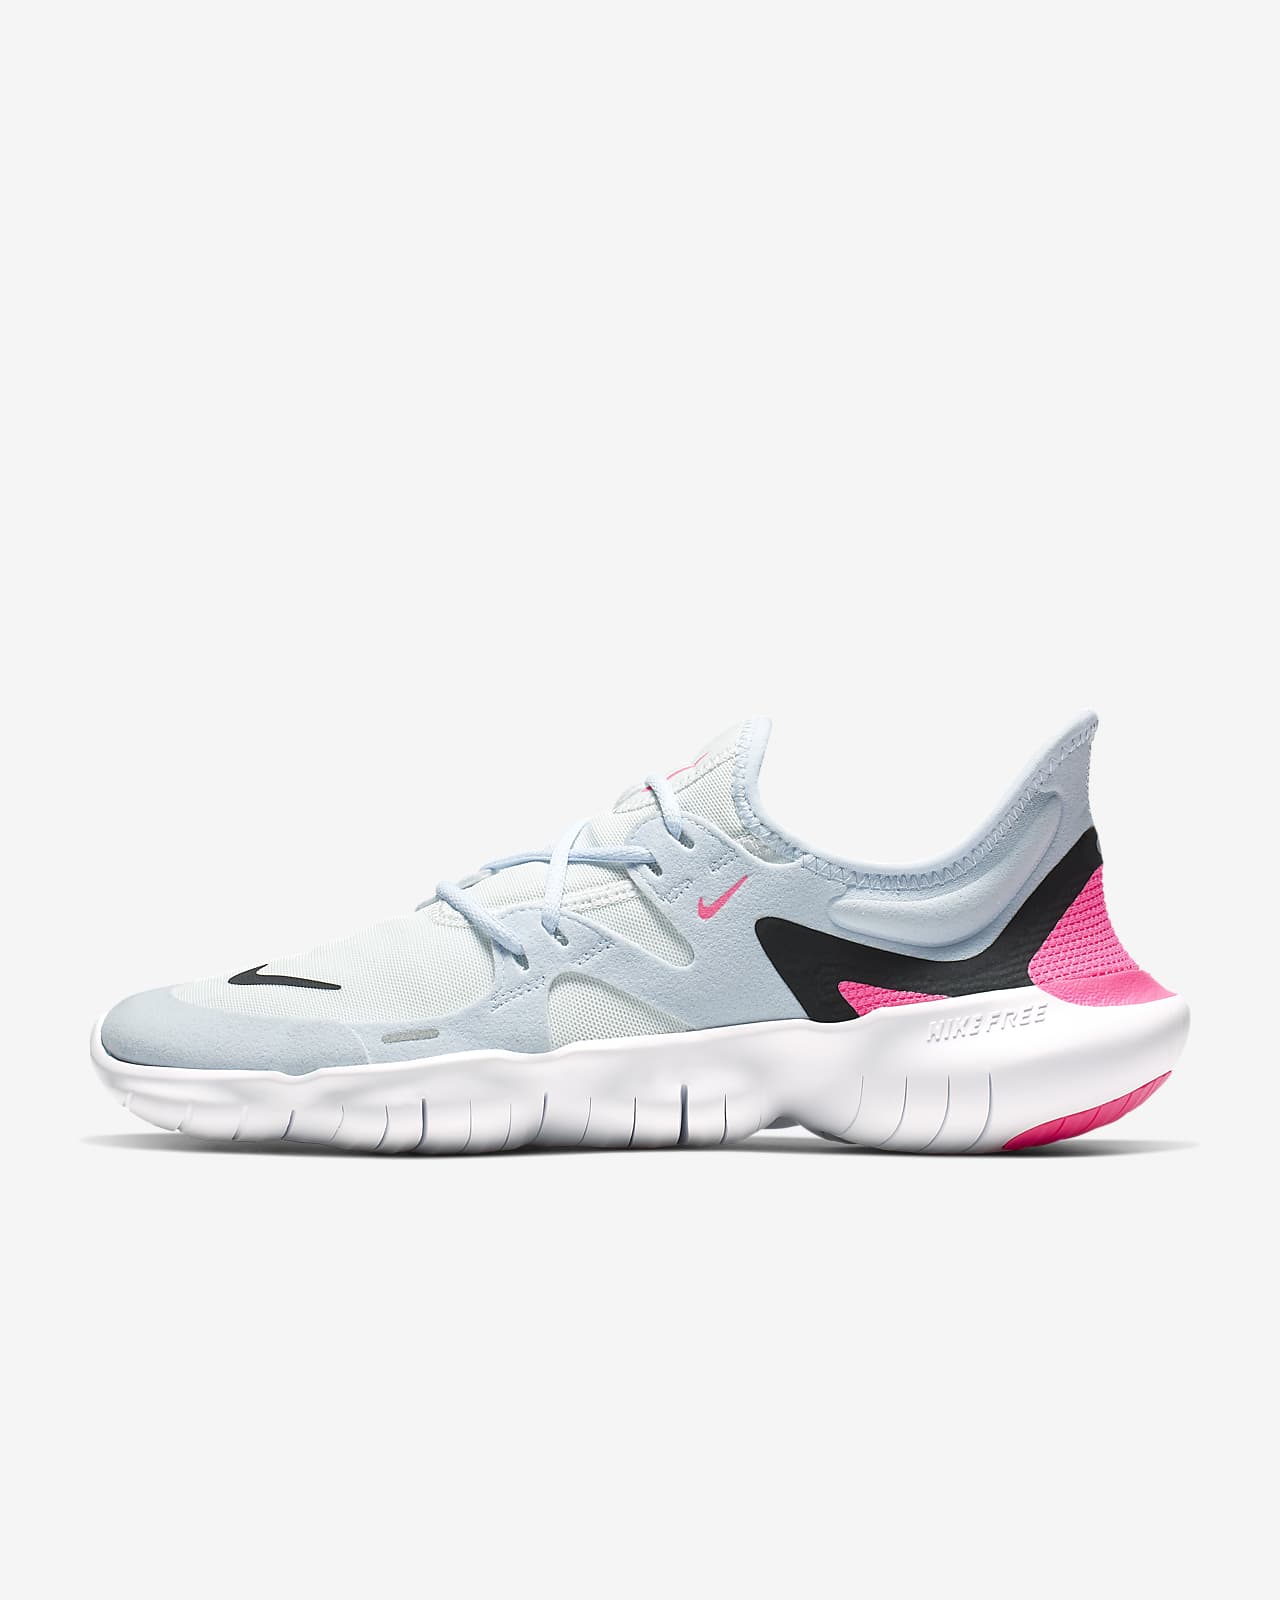 Nike Free RN 5.0 Women's Running Shoe 